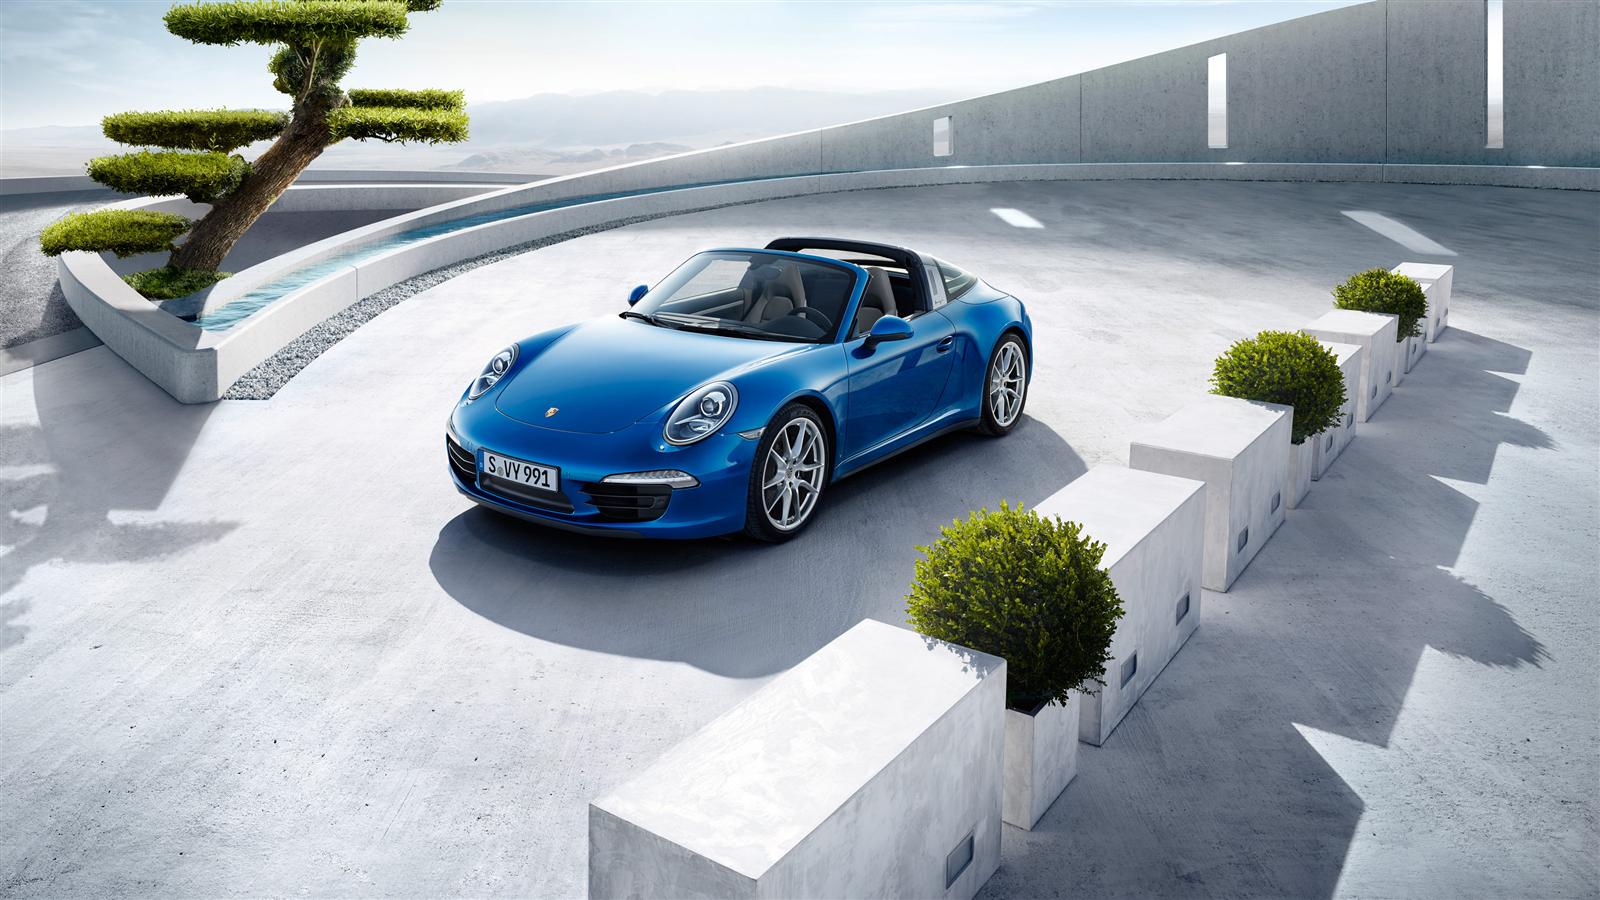 Porsche 911 Carrera S Need For Speed Wallpapers